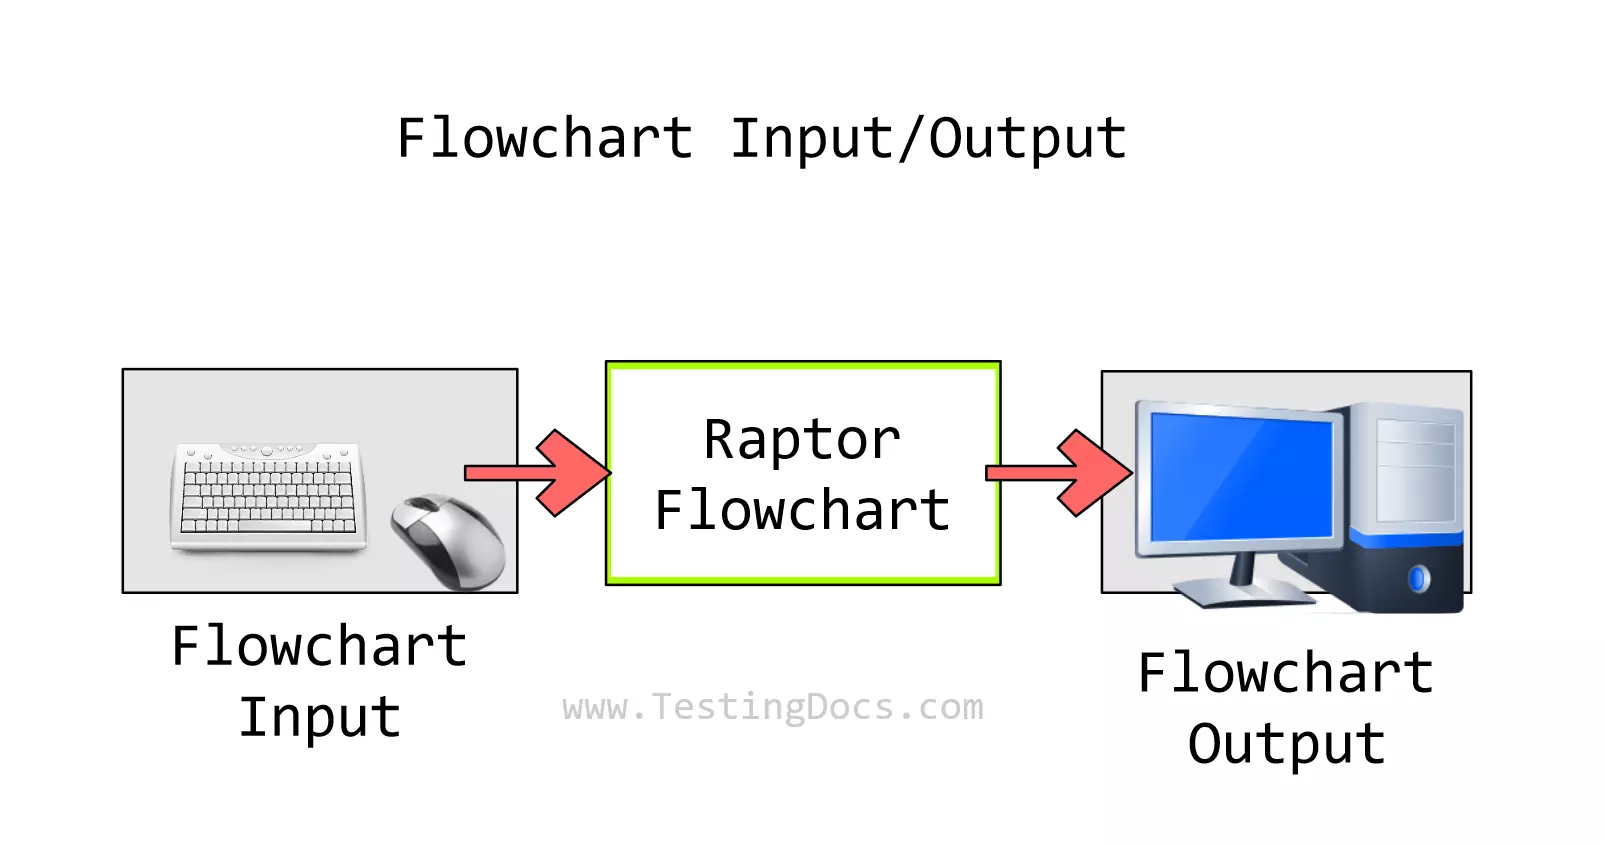 RAPTOR flowchart Input and Output